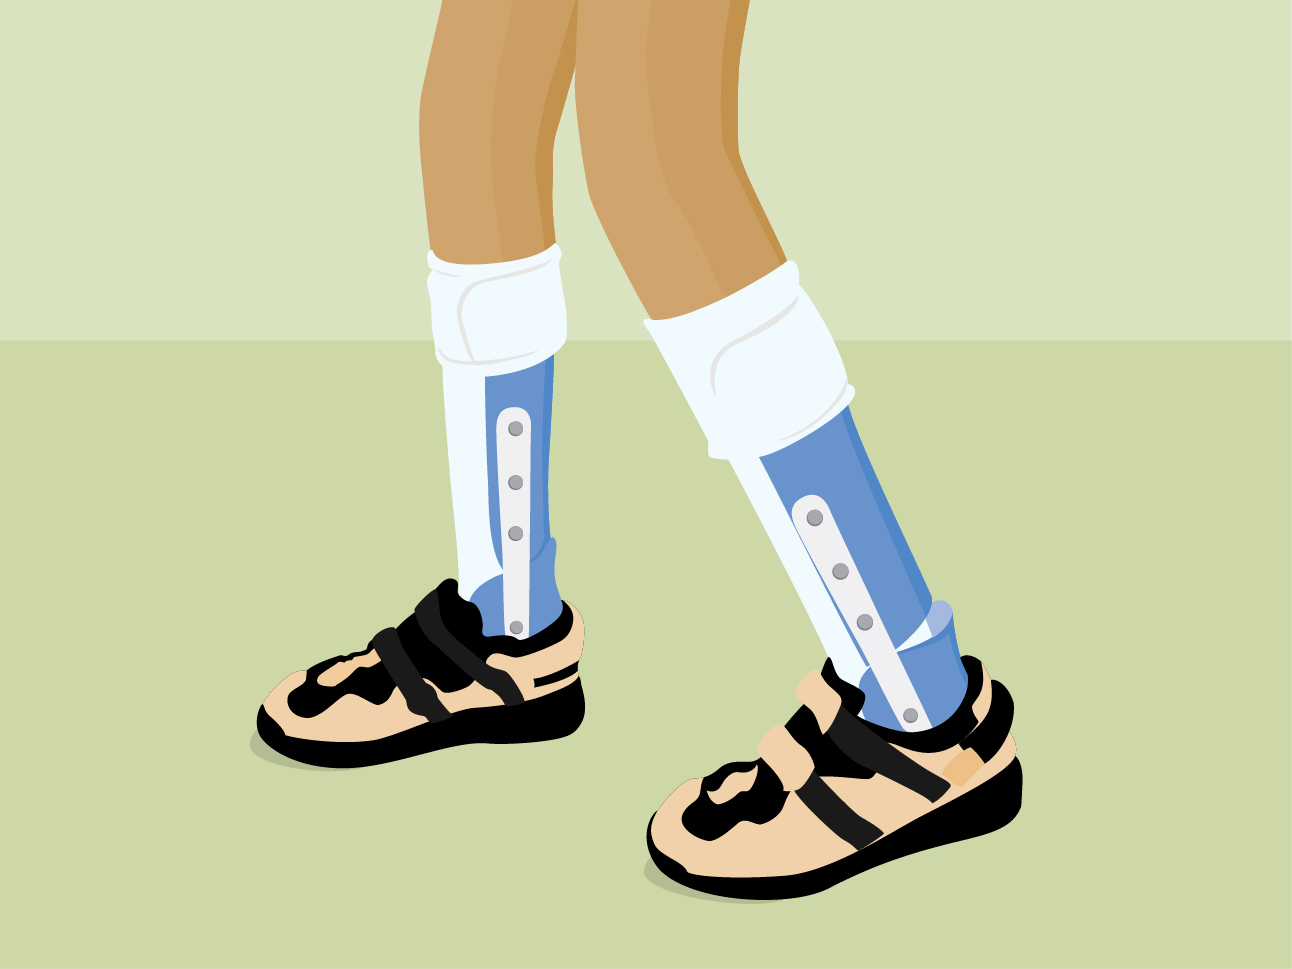 Leg Braces (Orthoses)